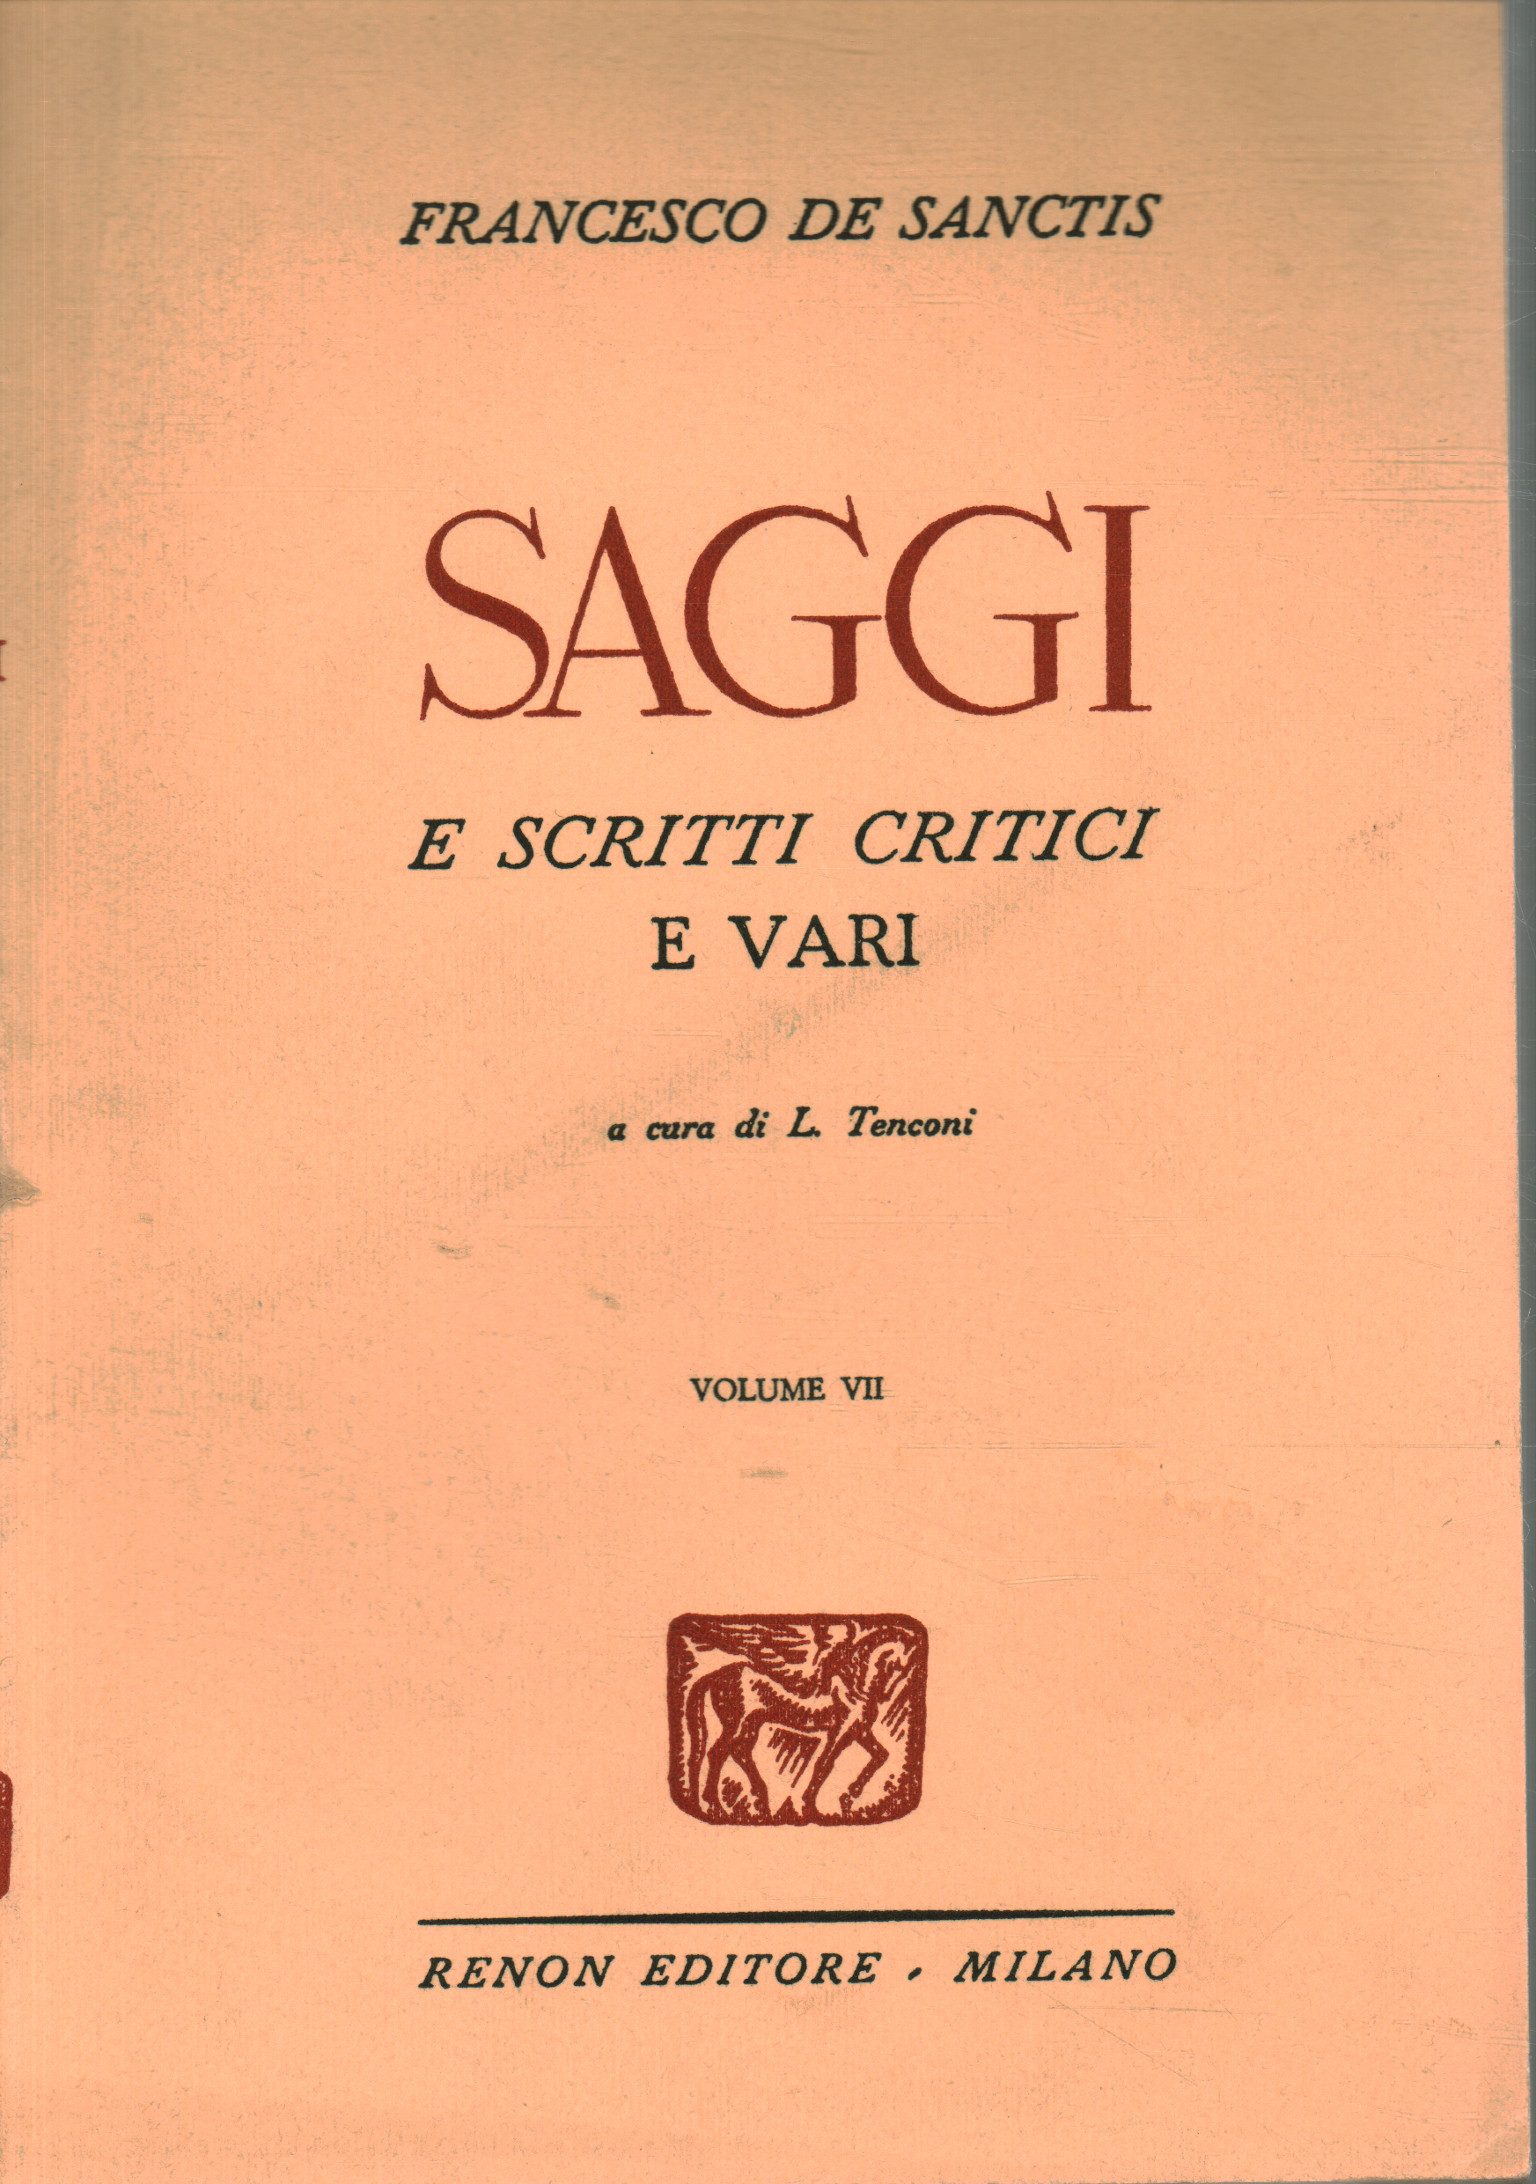 Critical and various essays and writings. Volume seventh, Francesco De Sanctis